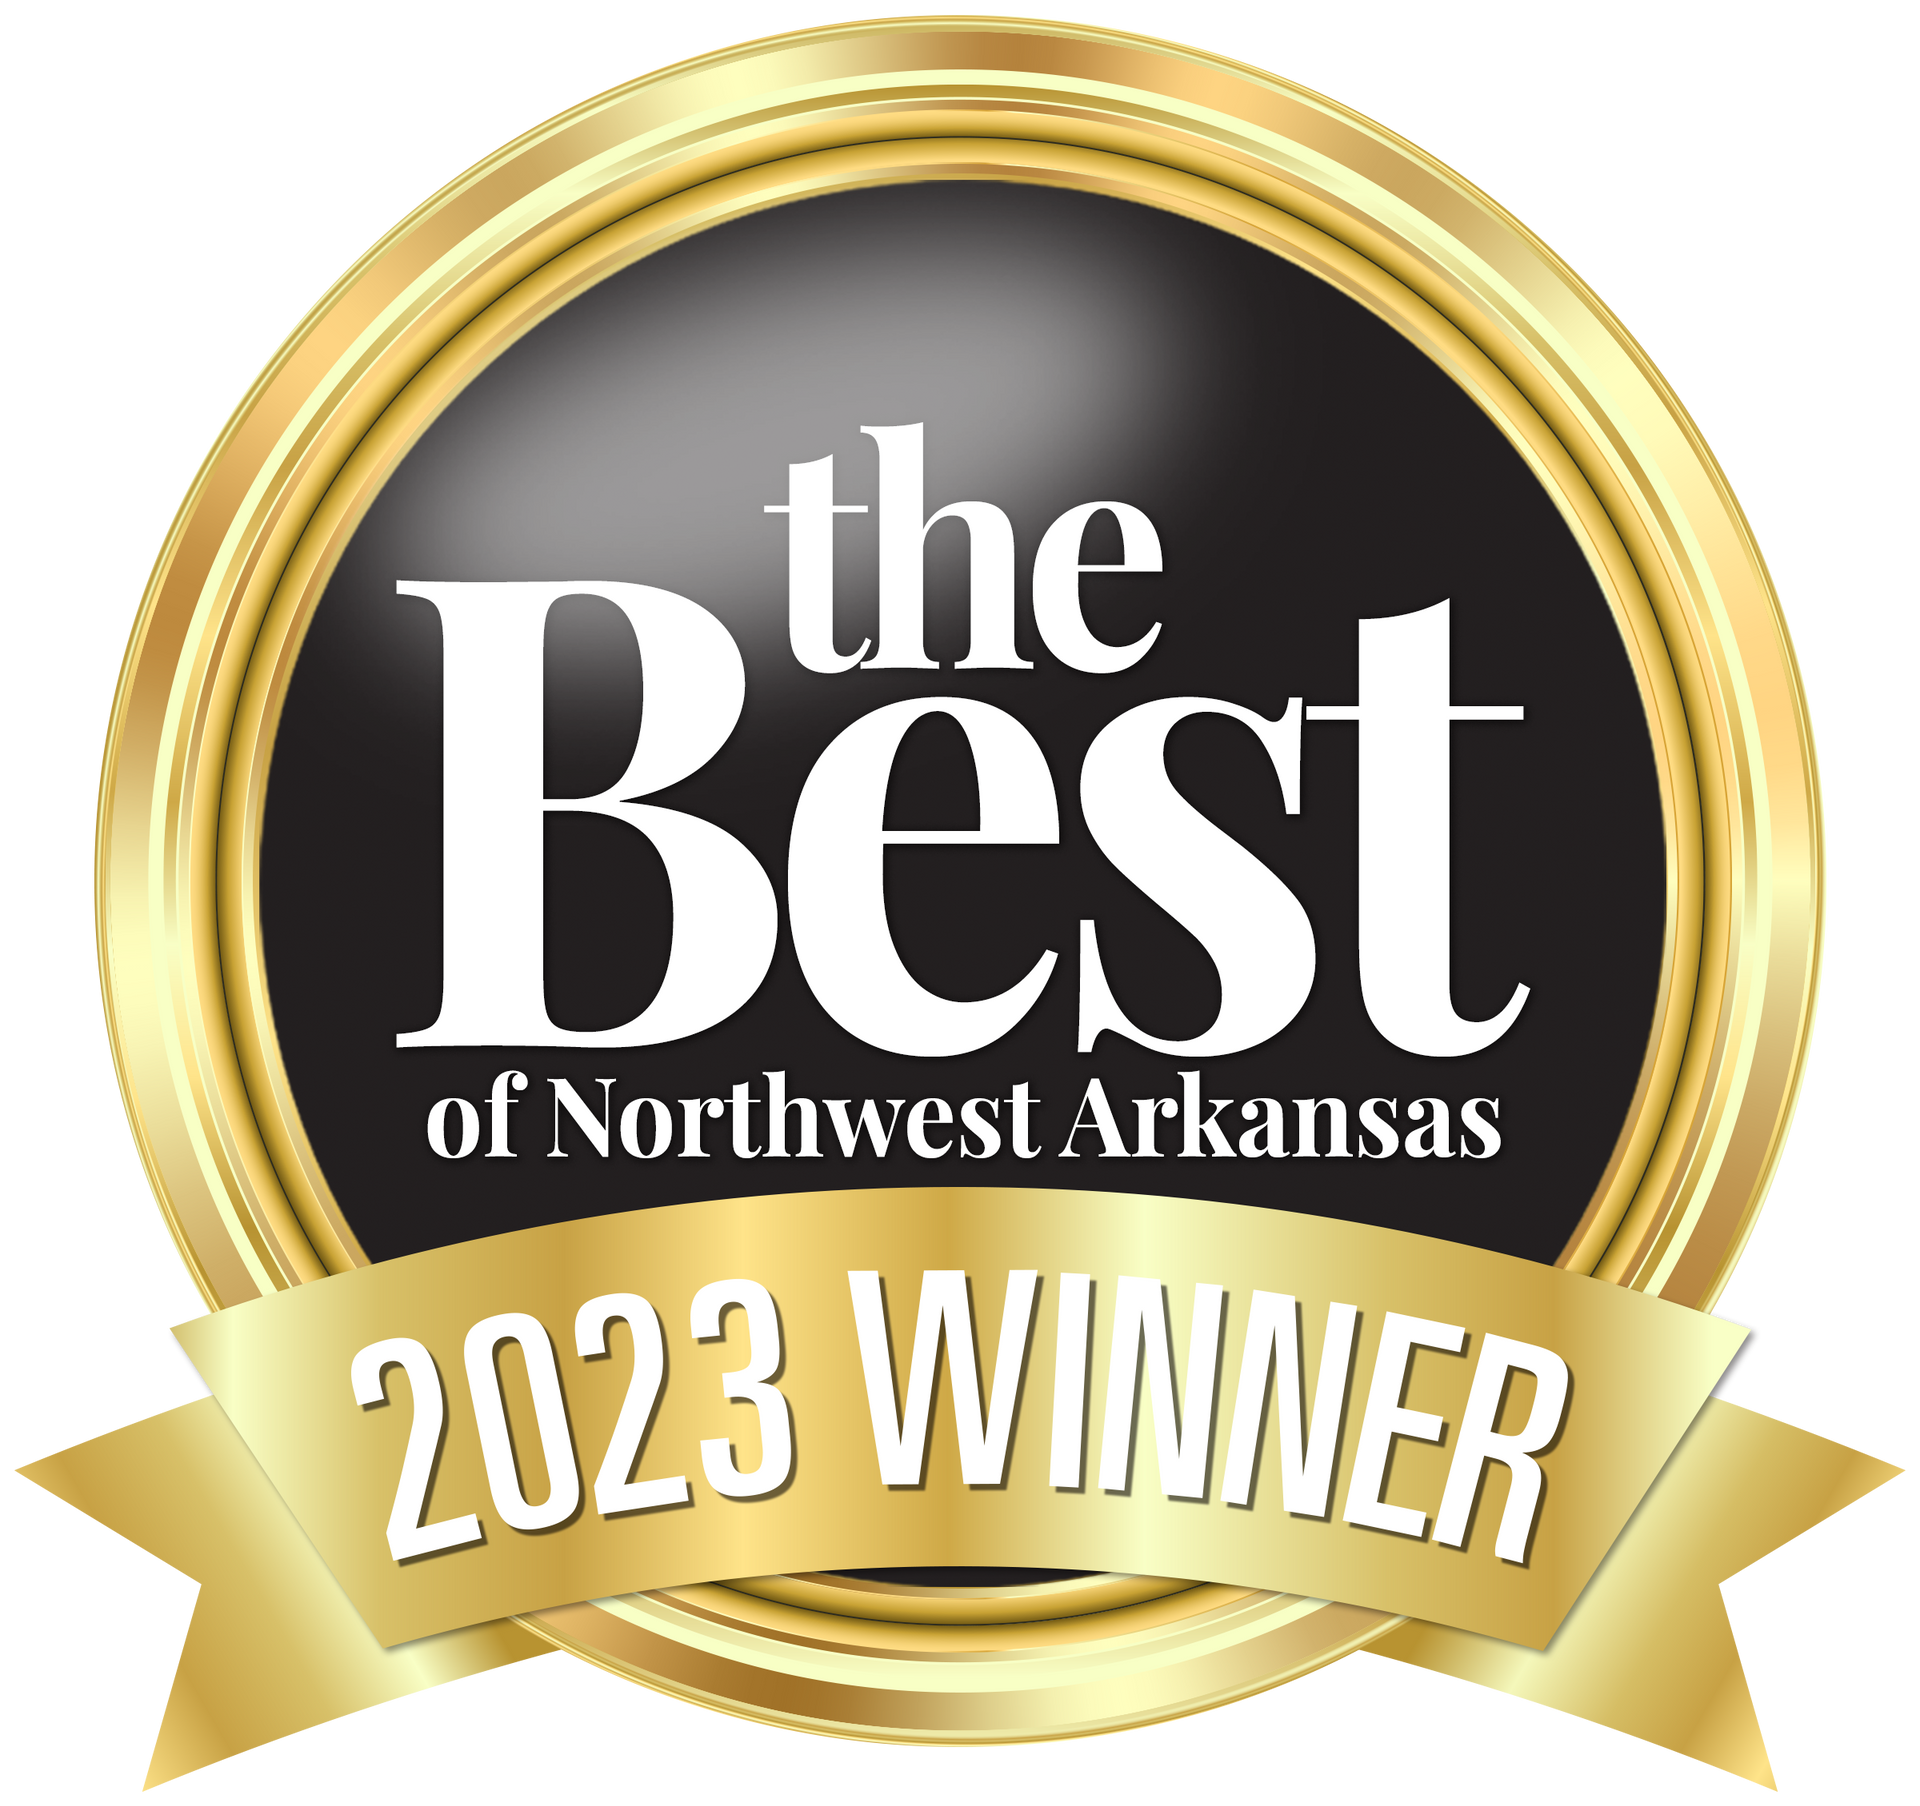 The Best of Northwest Arkansas badge